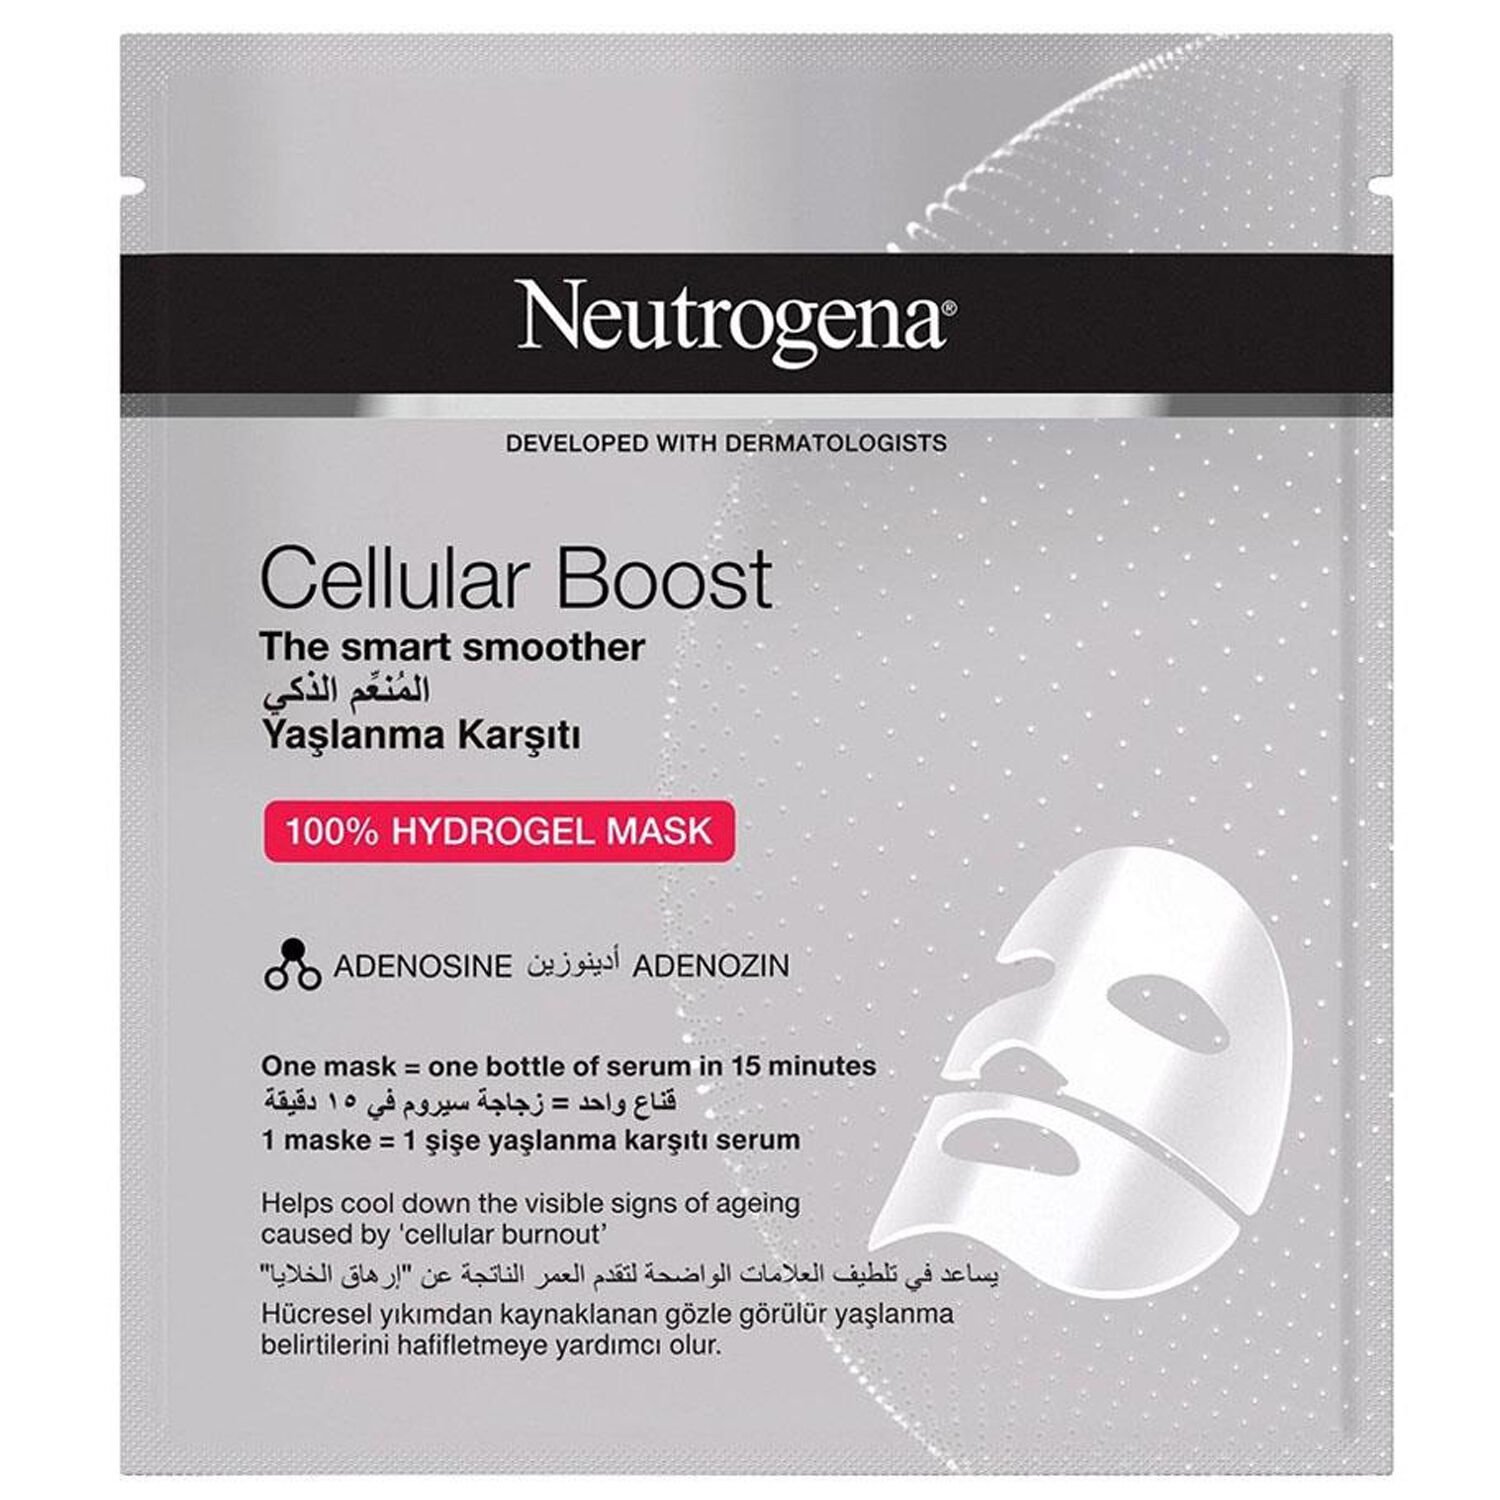 Neutrogena Cellular Boost Yaşlan ma Karşıtı Hidrojel Maske 30 ml